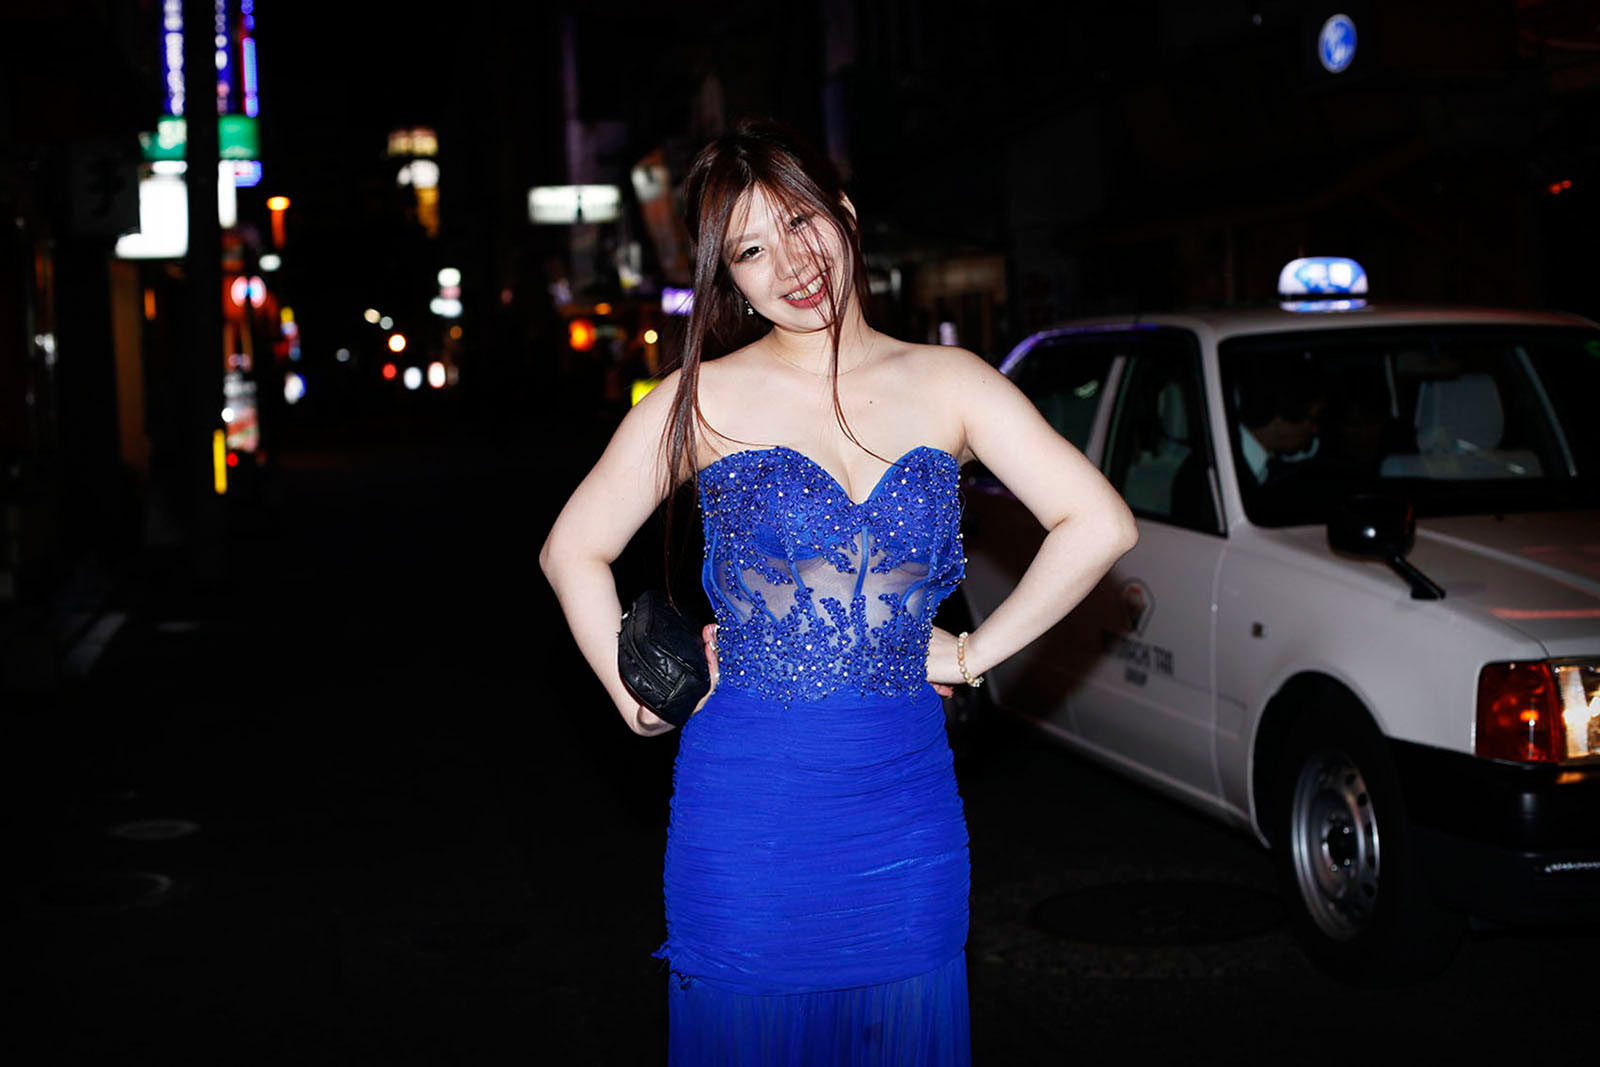   A girl in a blue dress Sasebo, Japan 2015        